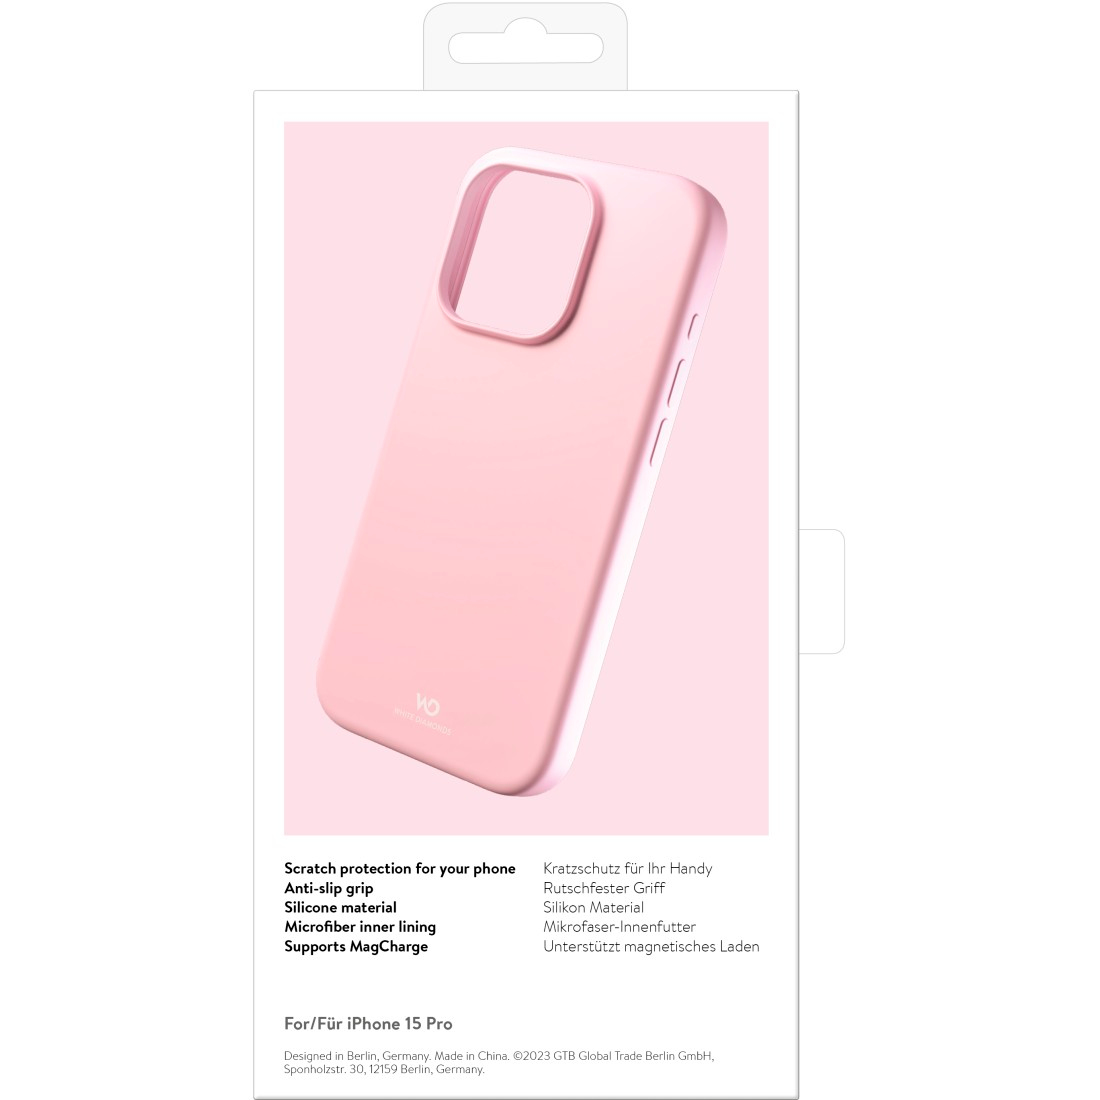 White Diamonds Mag Urban Case Cover voor Apple iPhone 15 Pro, Roze ,